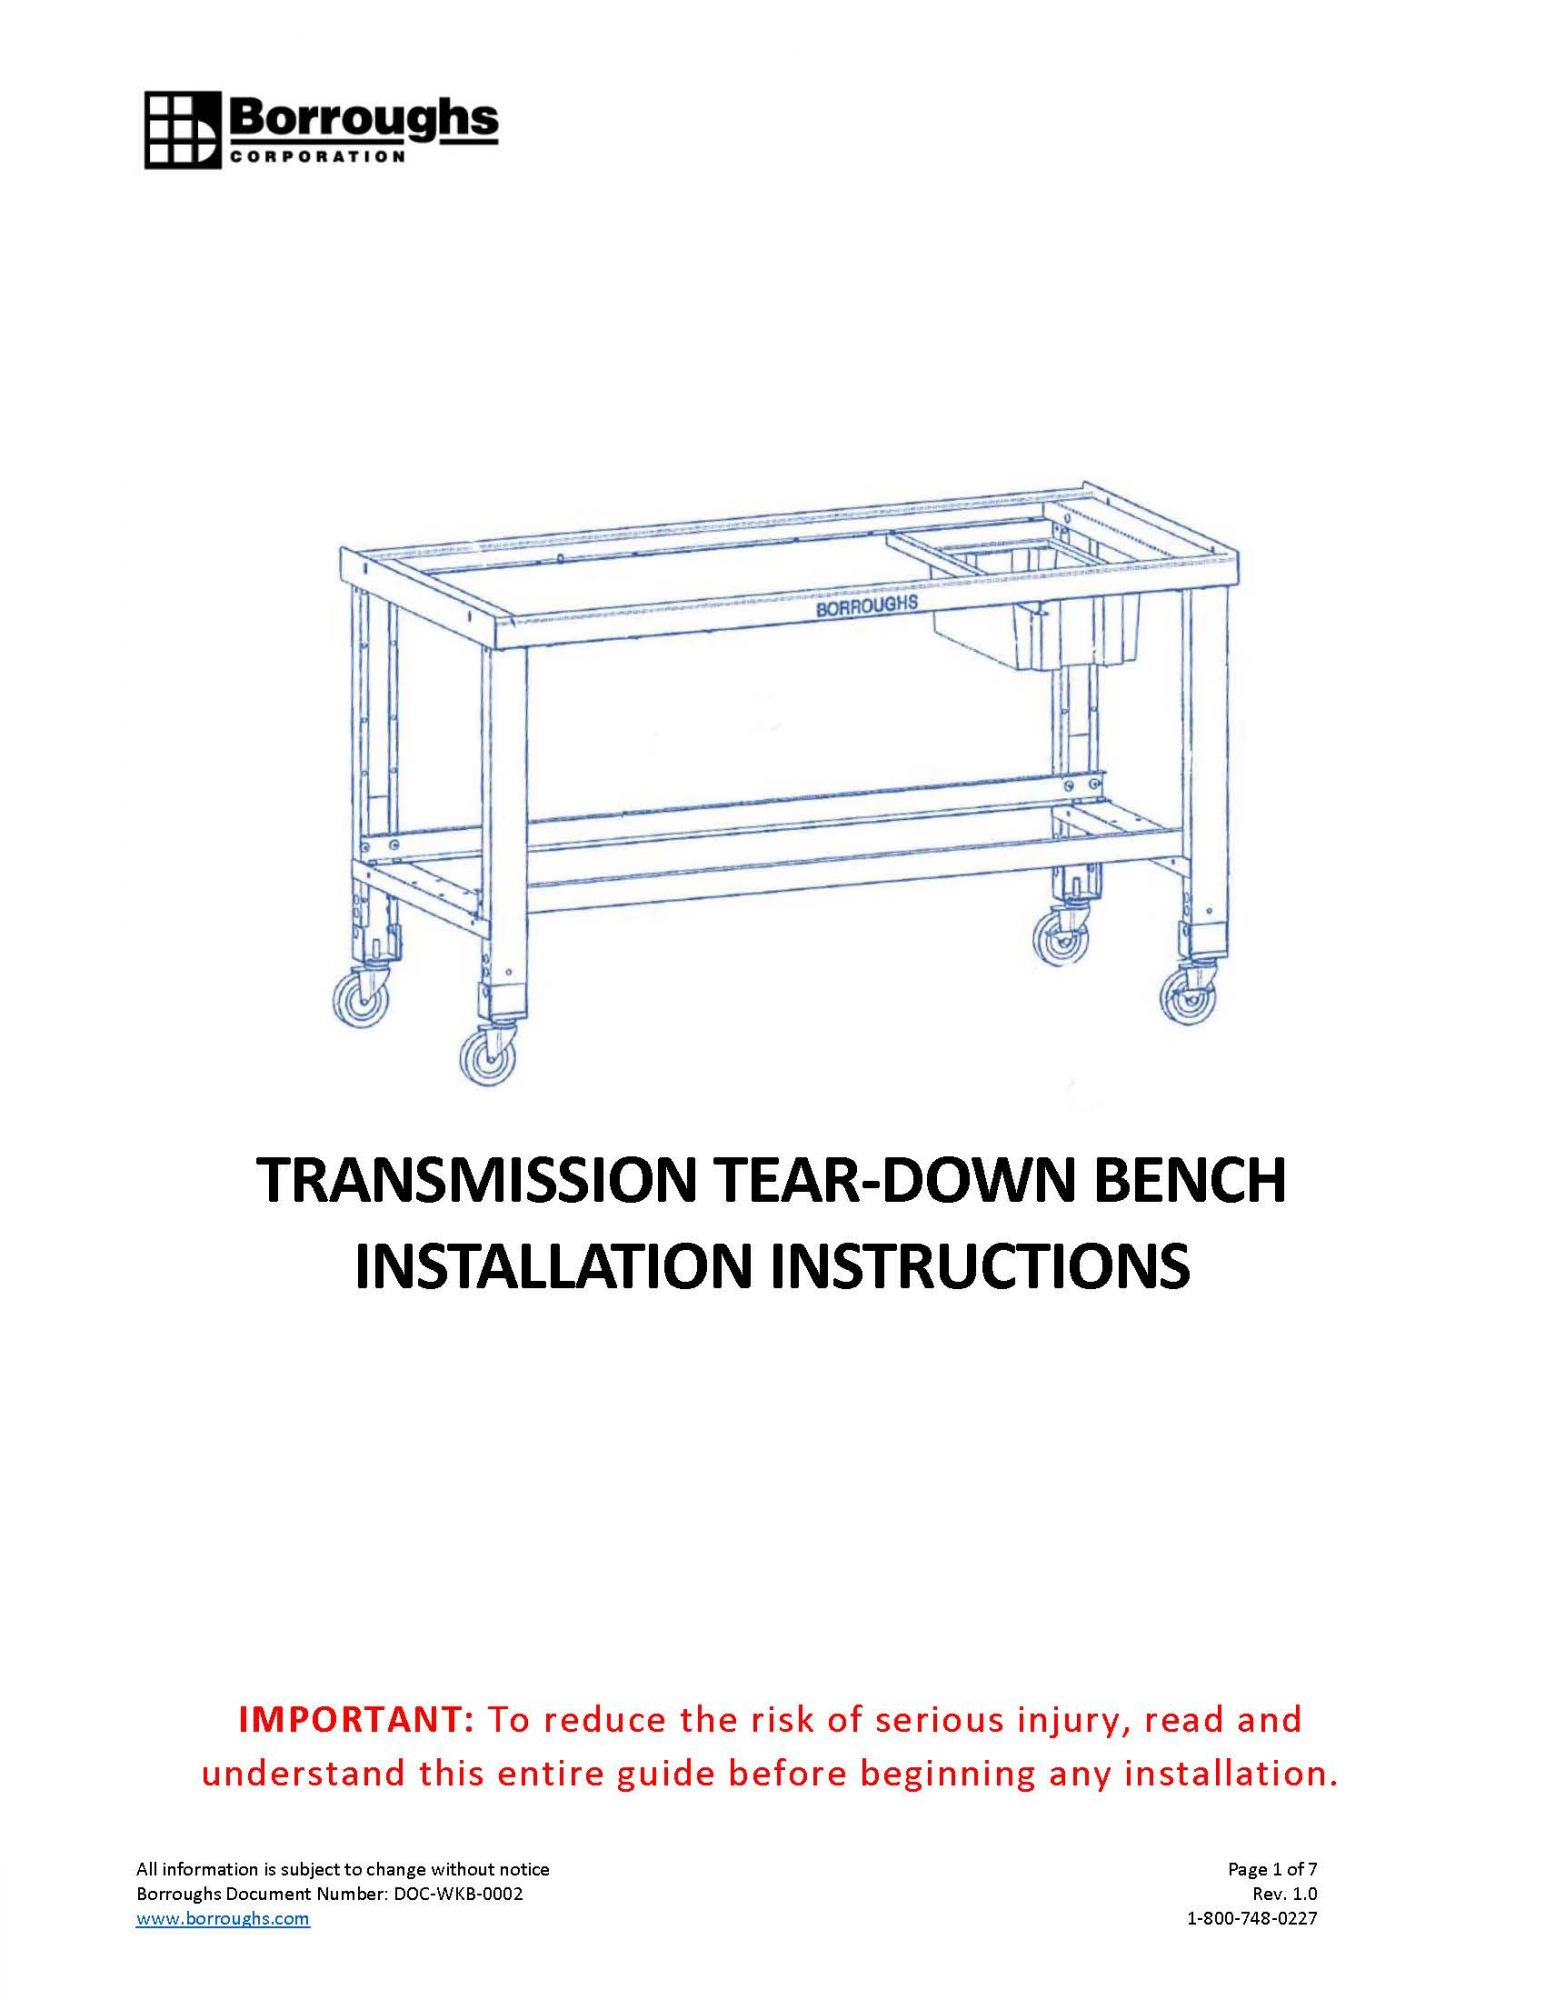 Transmission table installation